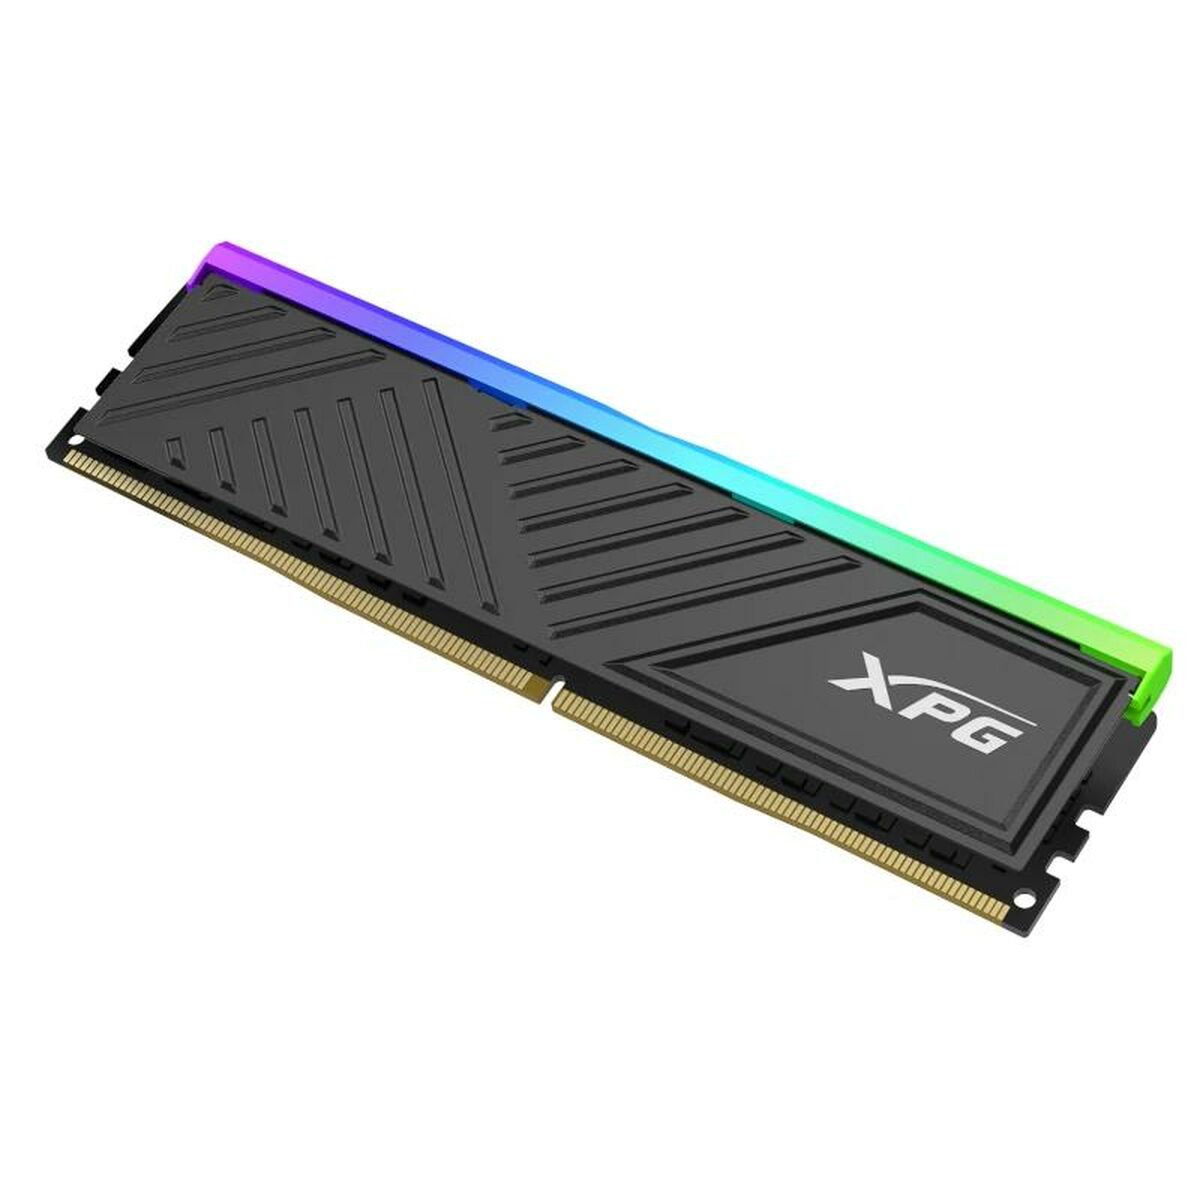 XPG SPECTRIX D35G DDR4 RGB RAM – High-Performance Memory Module